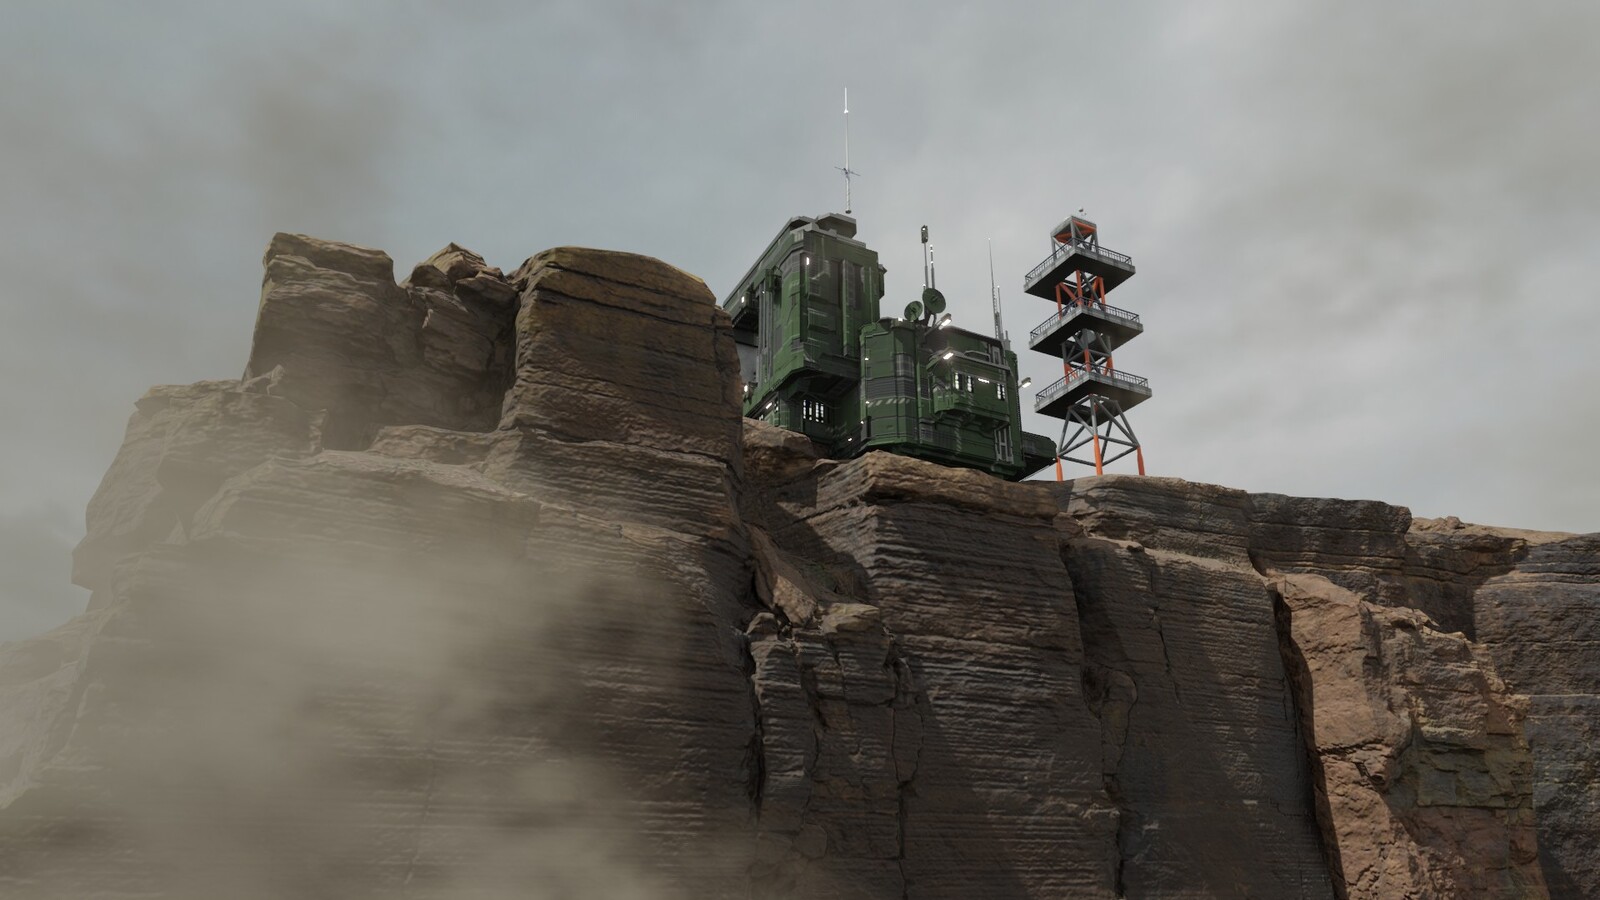 Sci Fi Radar Station